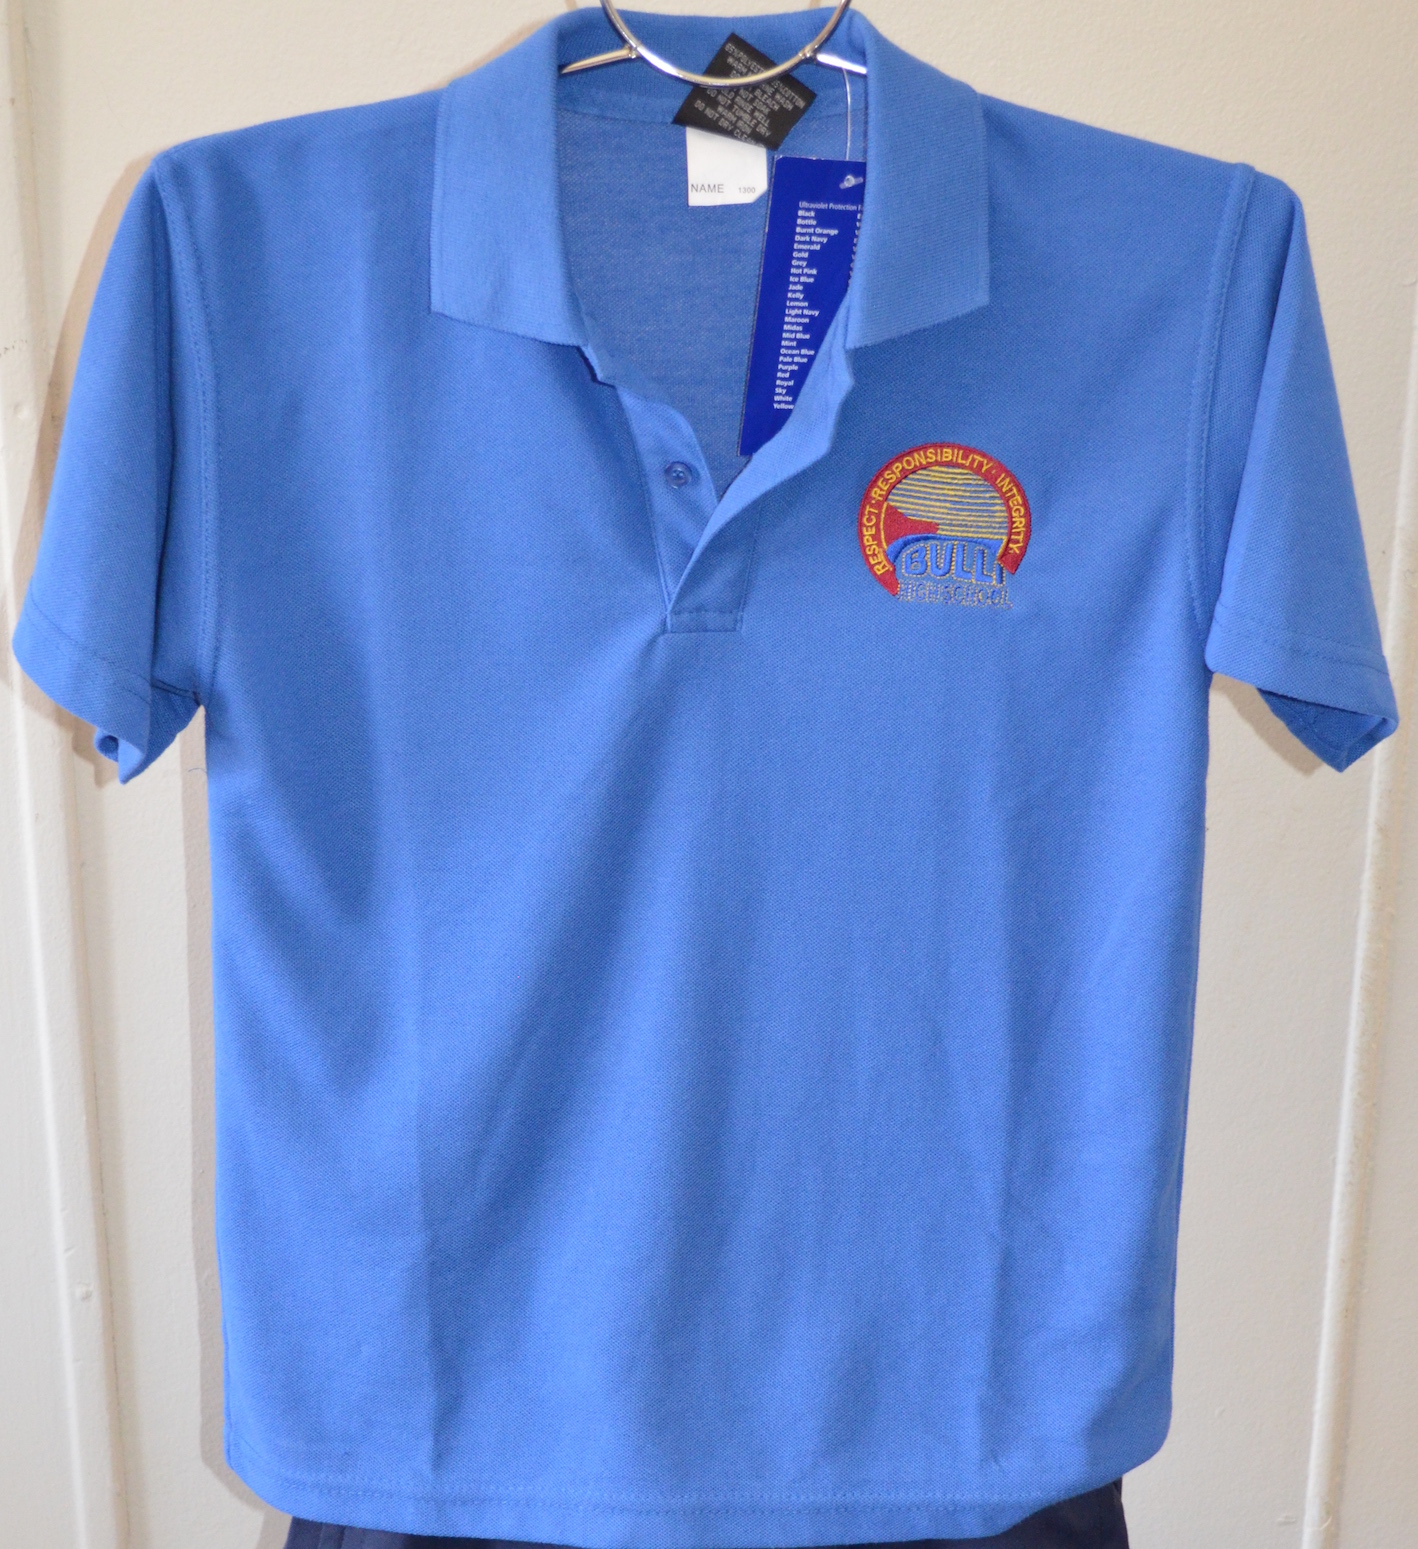 Junior blue polo shirt (unisex)